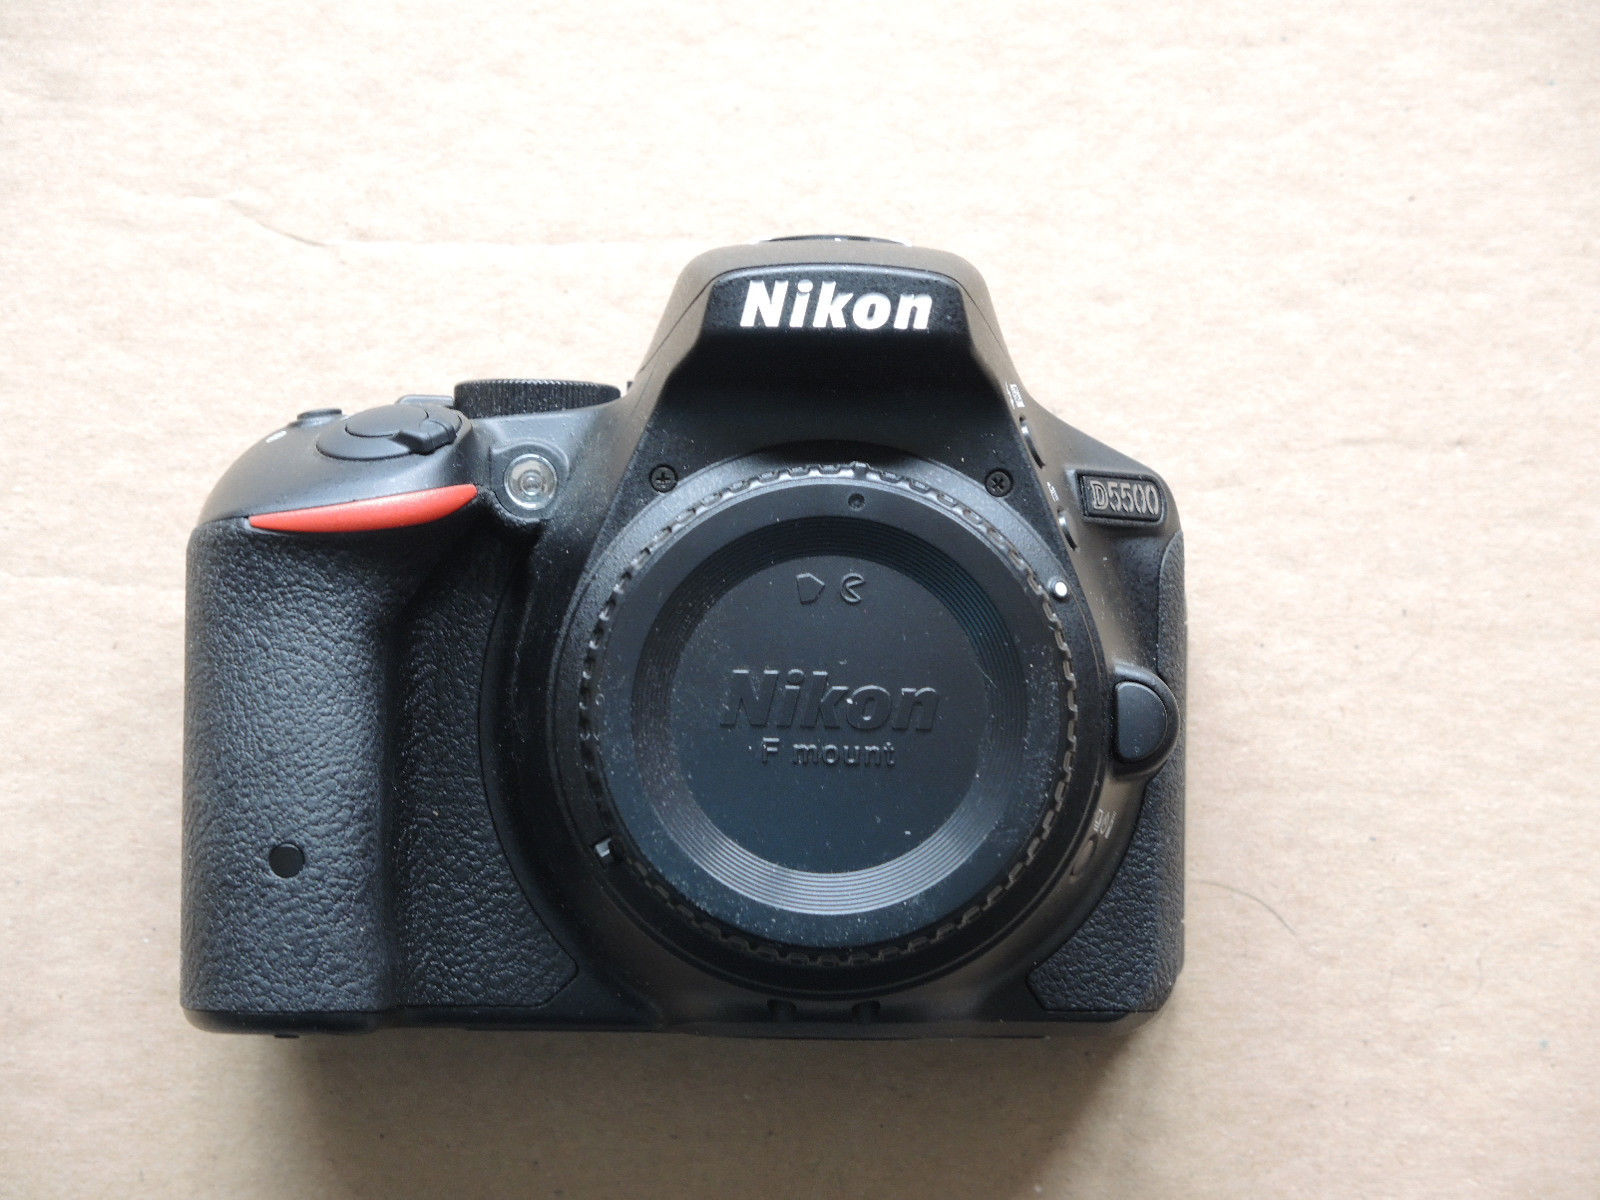 Nikon D D5500 24.2 MP SLR-Digitalkamera - Schwarz nur Gehäuse